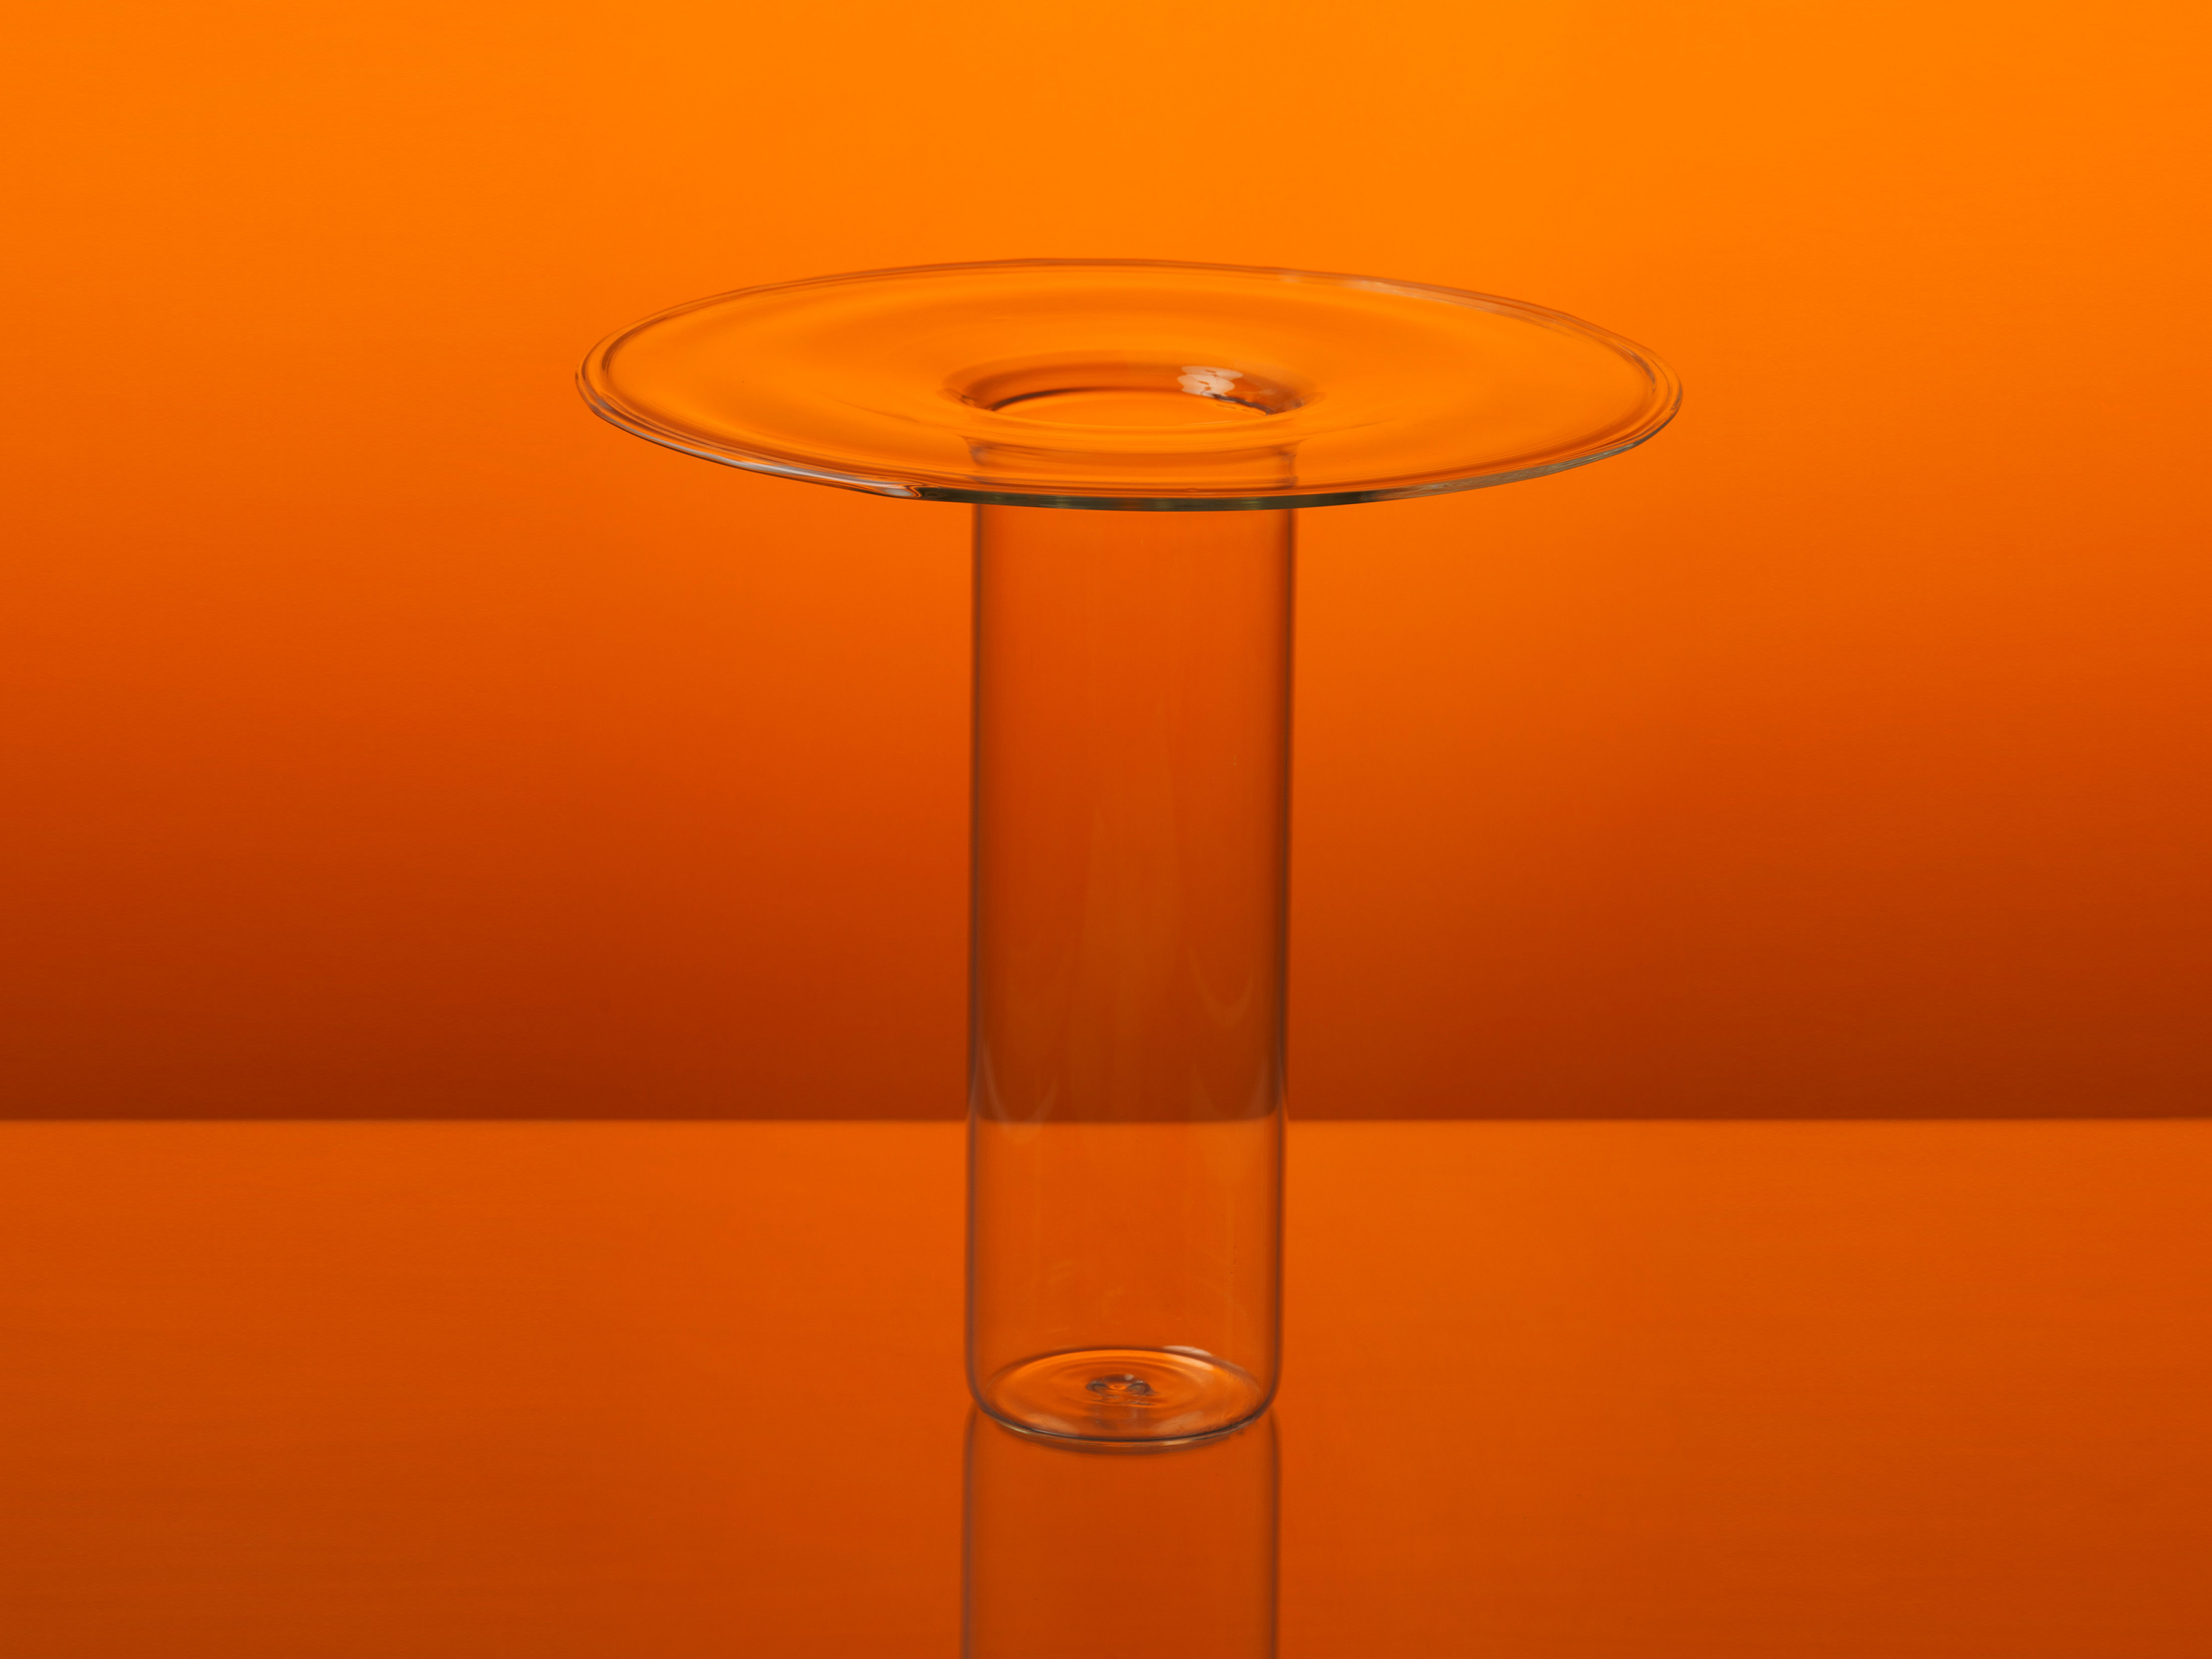 Glass vase on an orange background